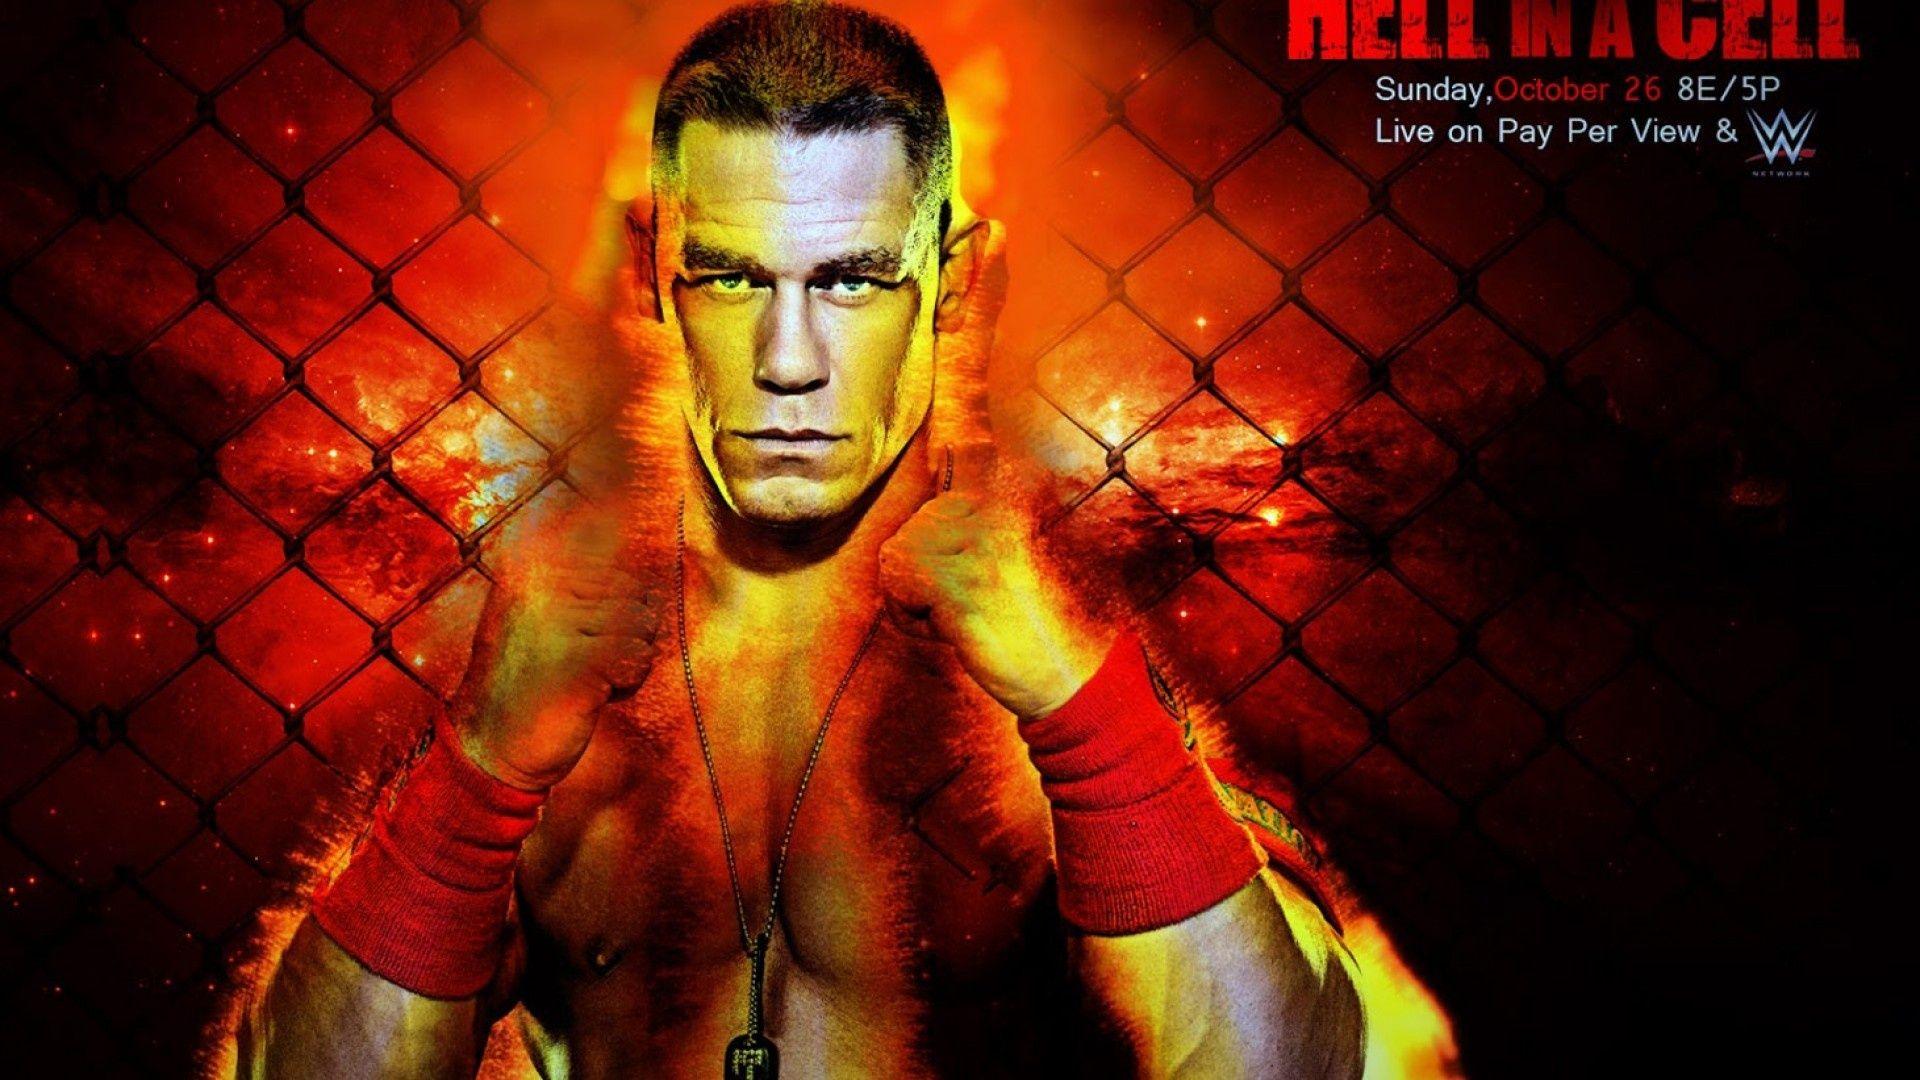 Wwe, Wwf, Wrestling, John Cena, Hell In A Cell 2014